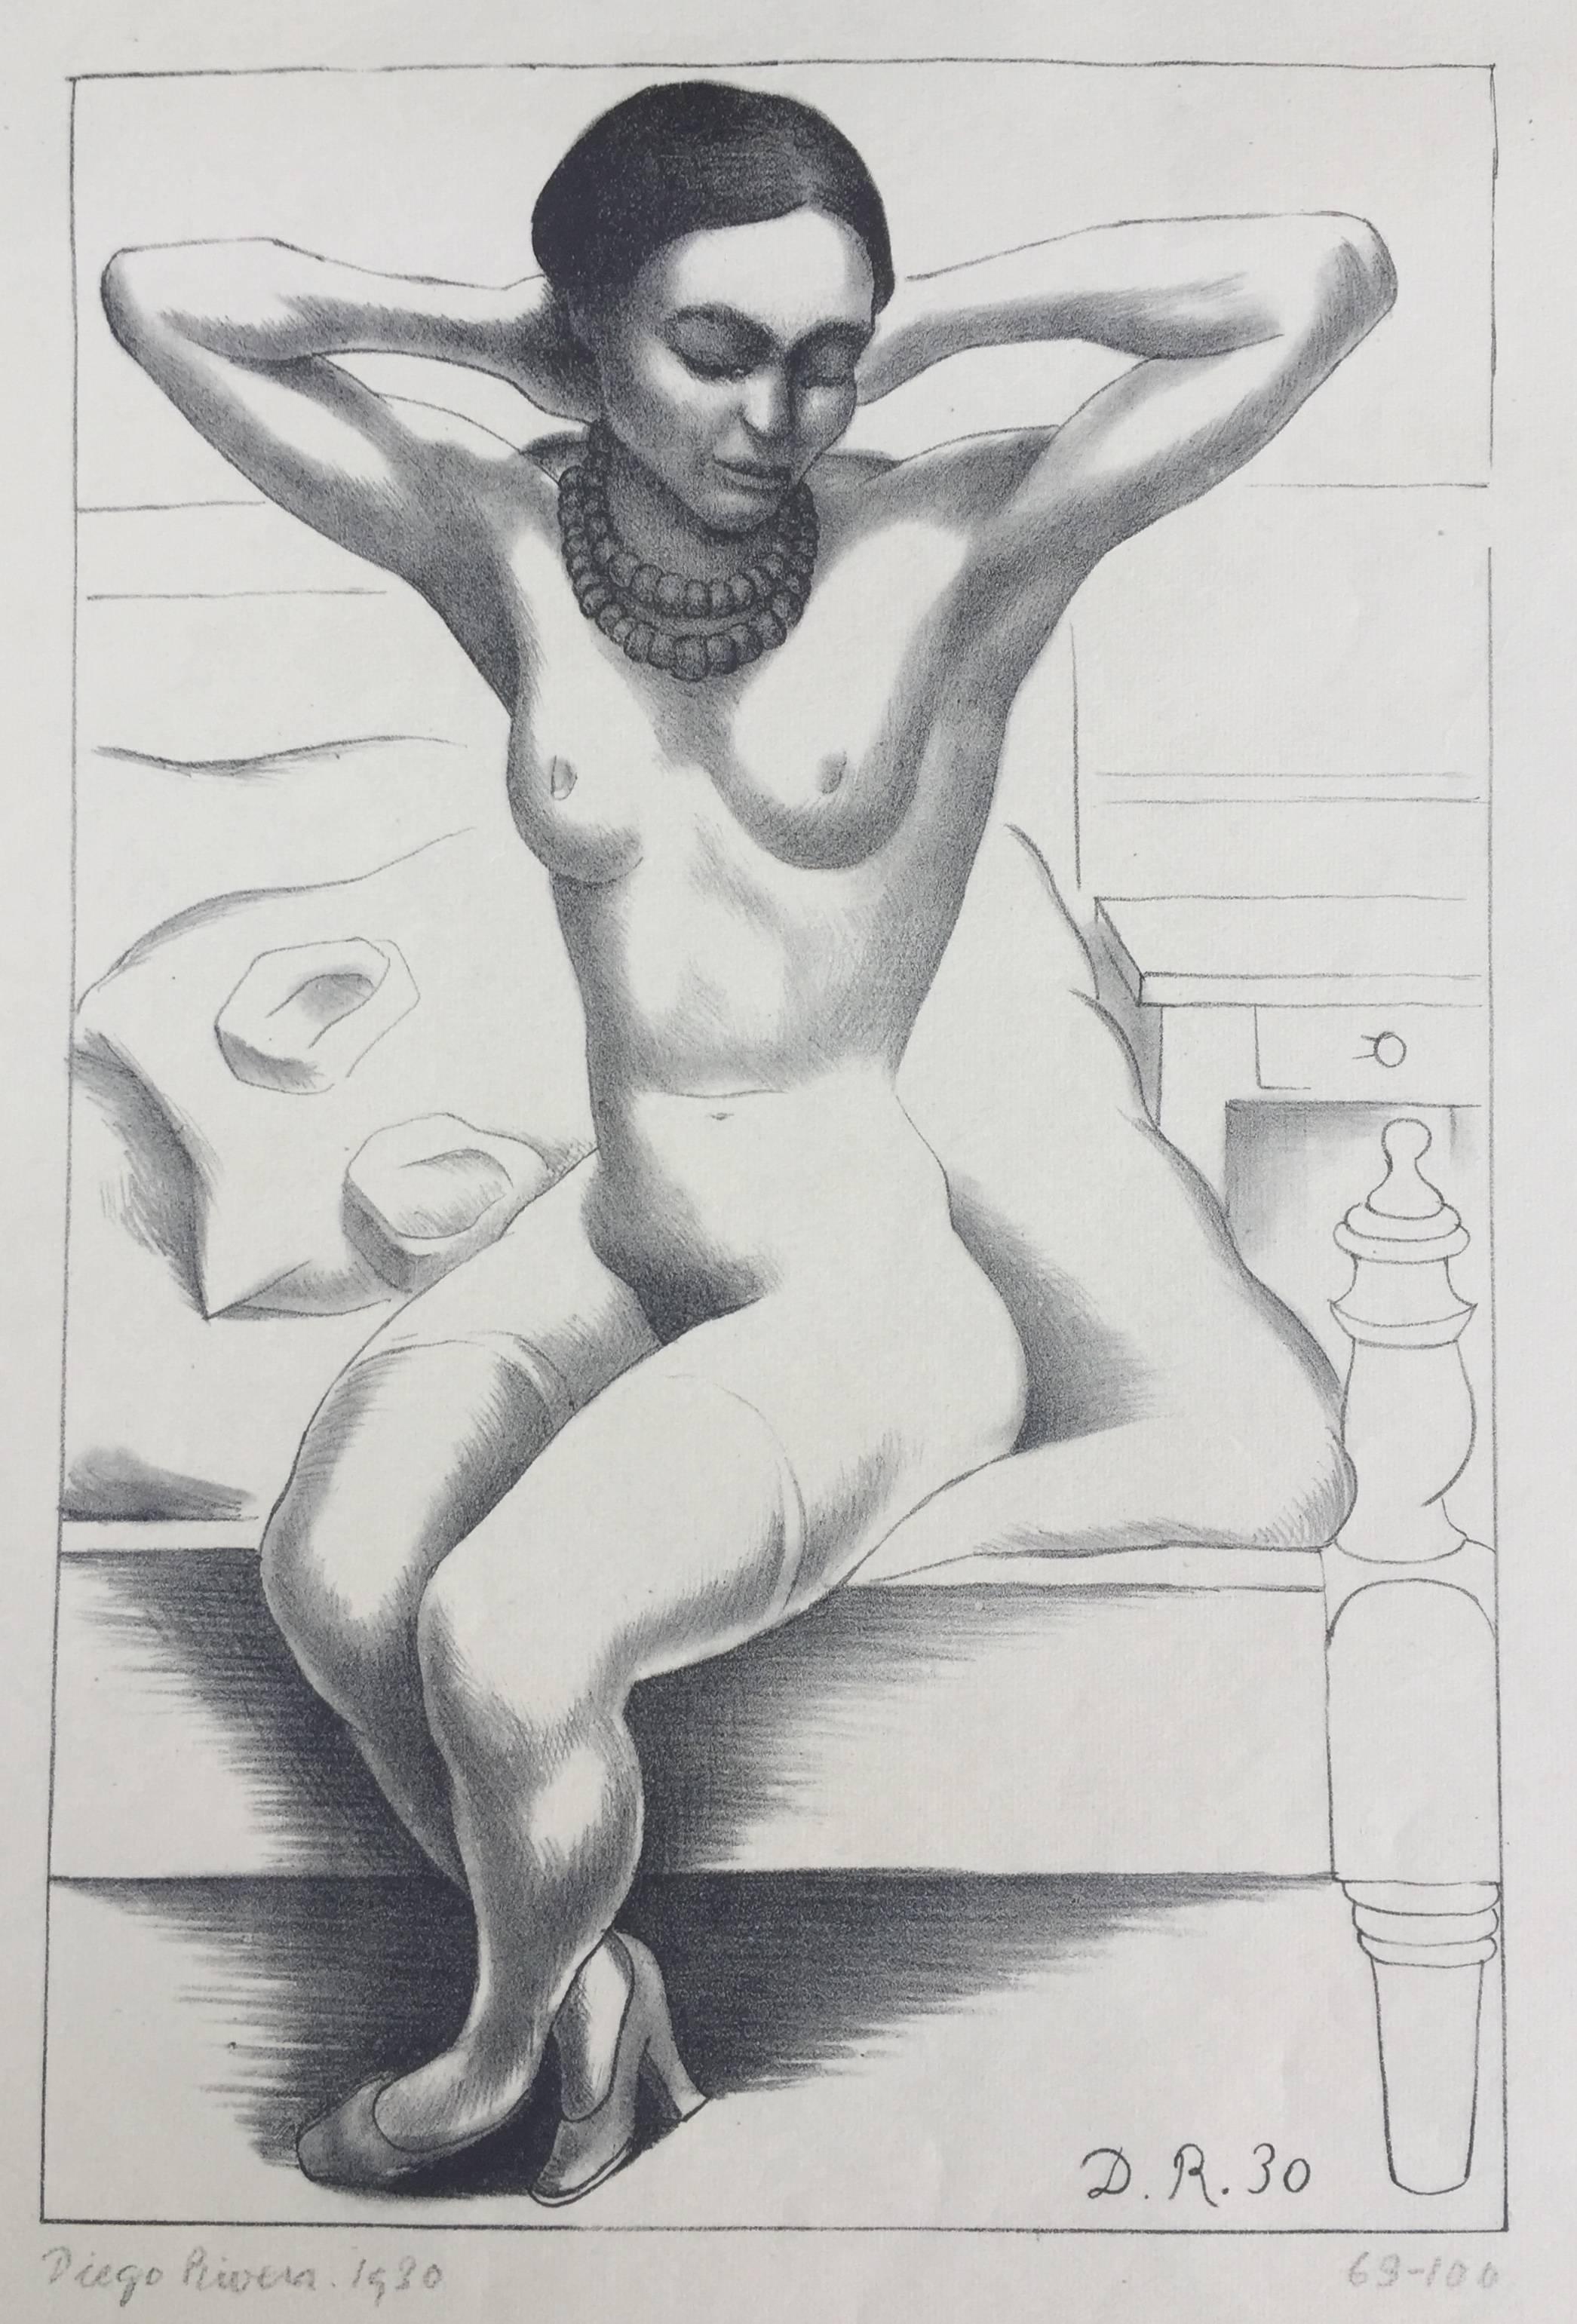              FRIDA KAHLO - (NUDE SITTING) - Print by Diego Rivera